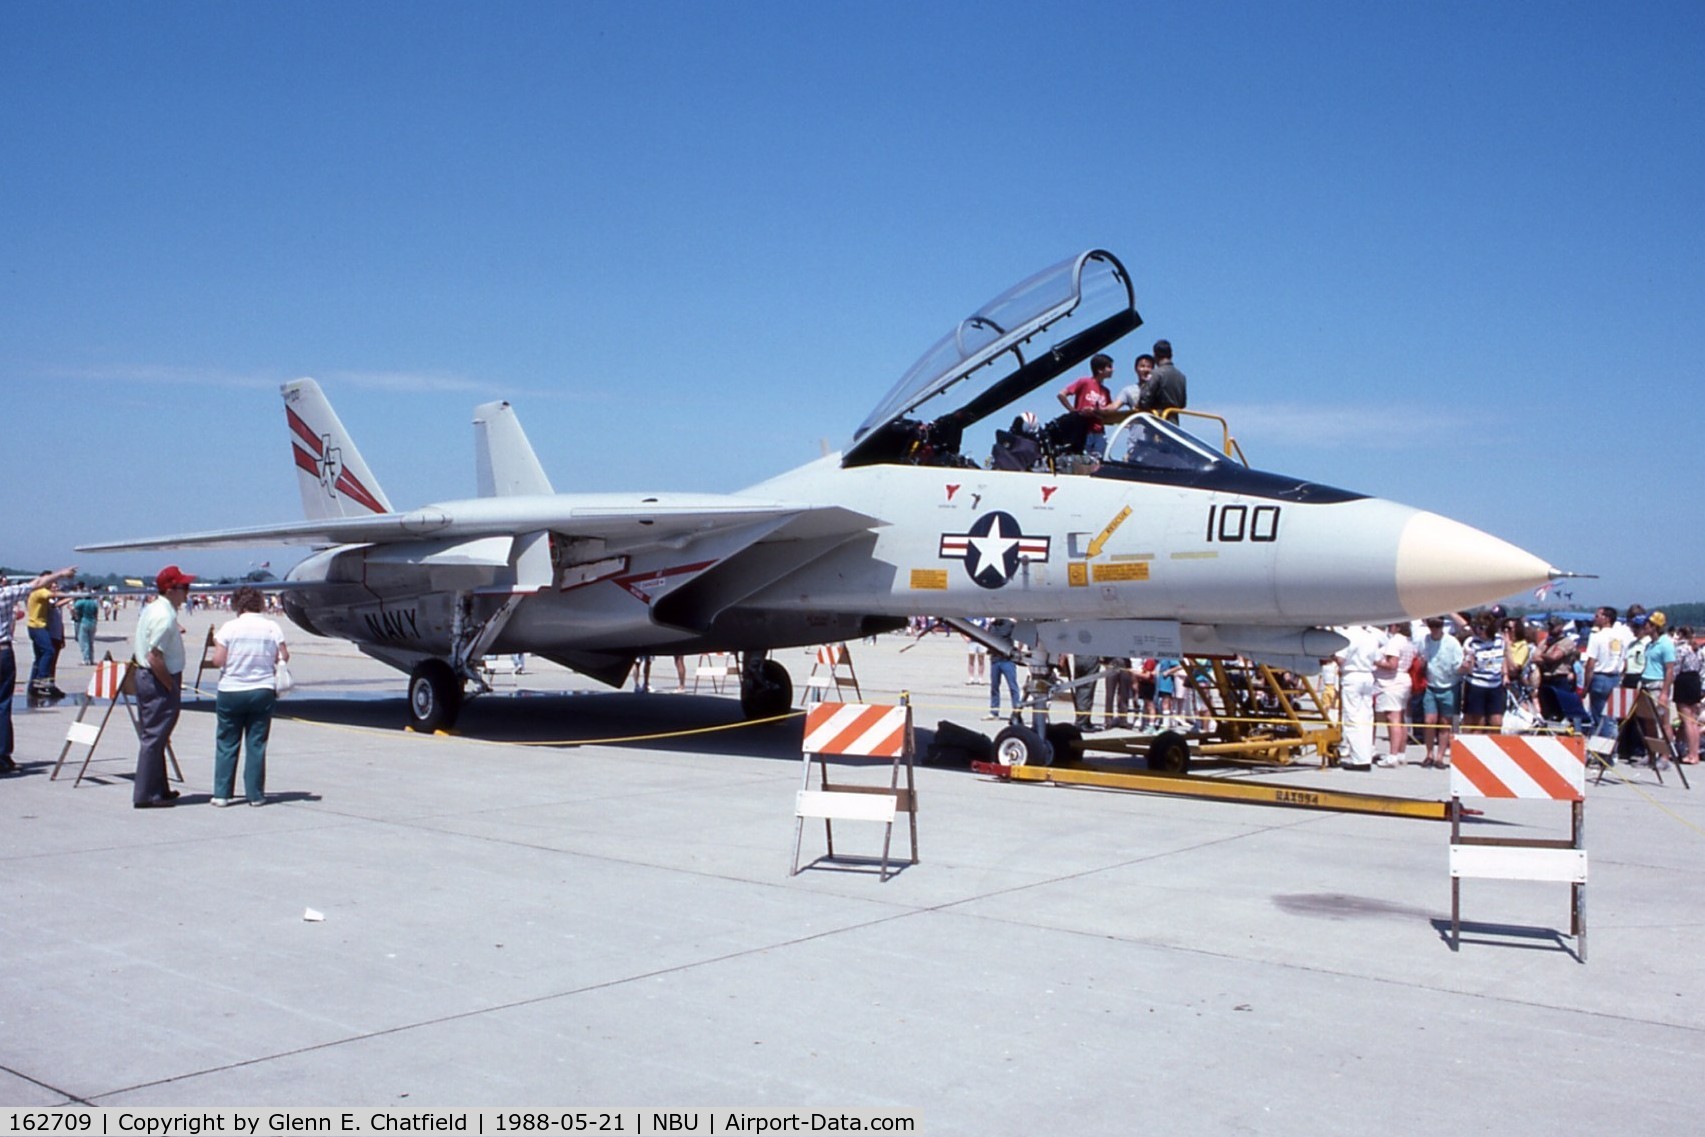 162709, Grumman F-14A Tomcat C/N 555, F-14A at the open house